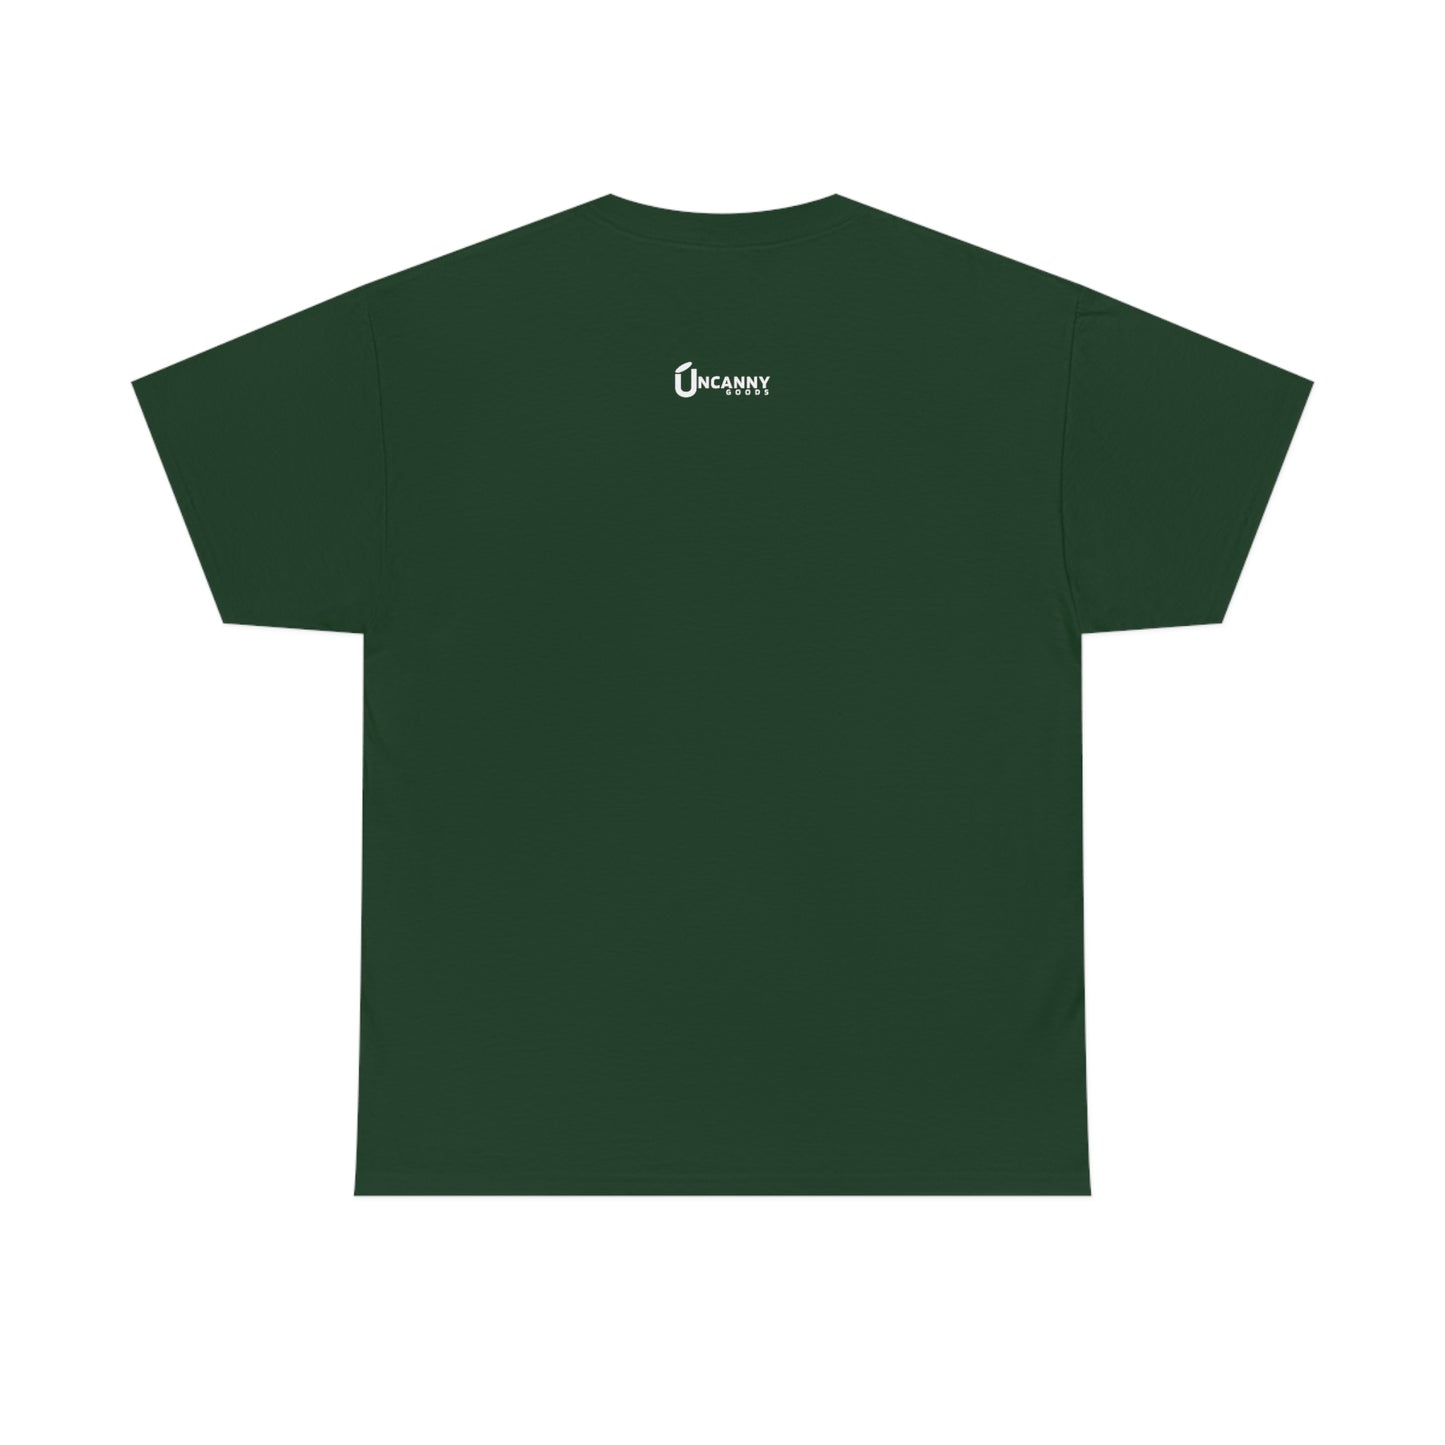 Generation X Unisex Cotton T-shirt